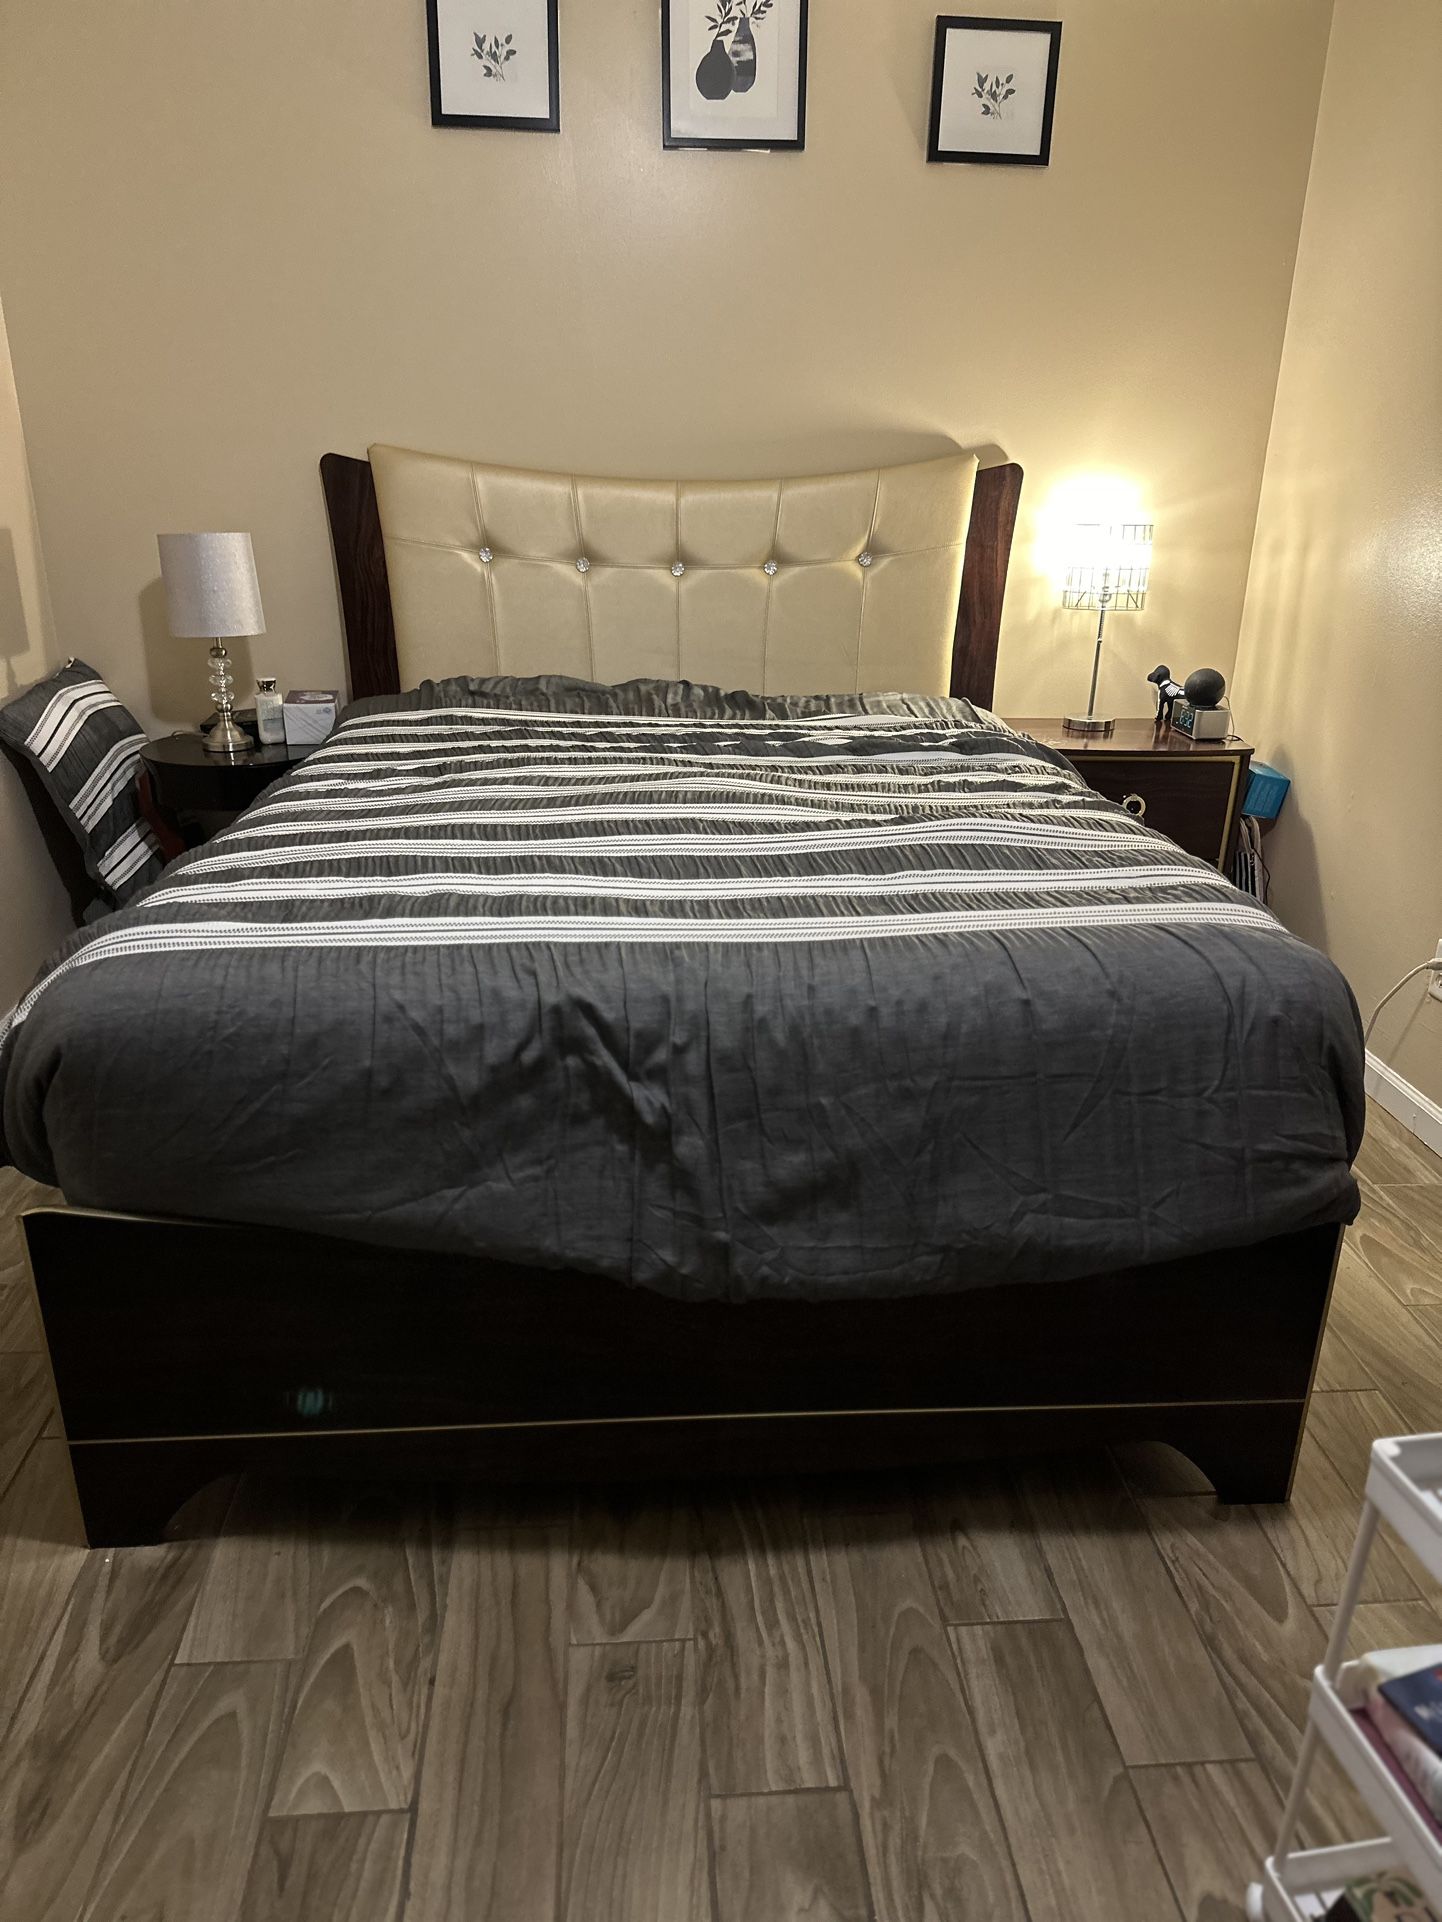 Complete Bed Set for Sale - Bed Frame, Nightstand, Dresser, Mirror